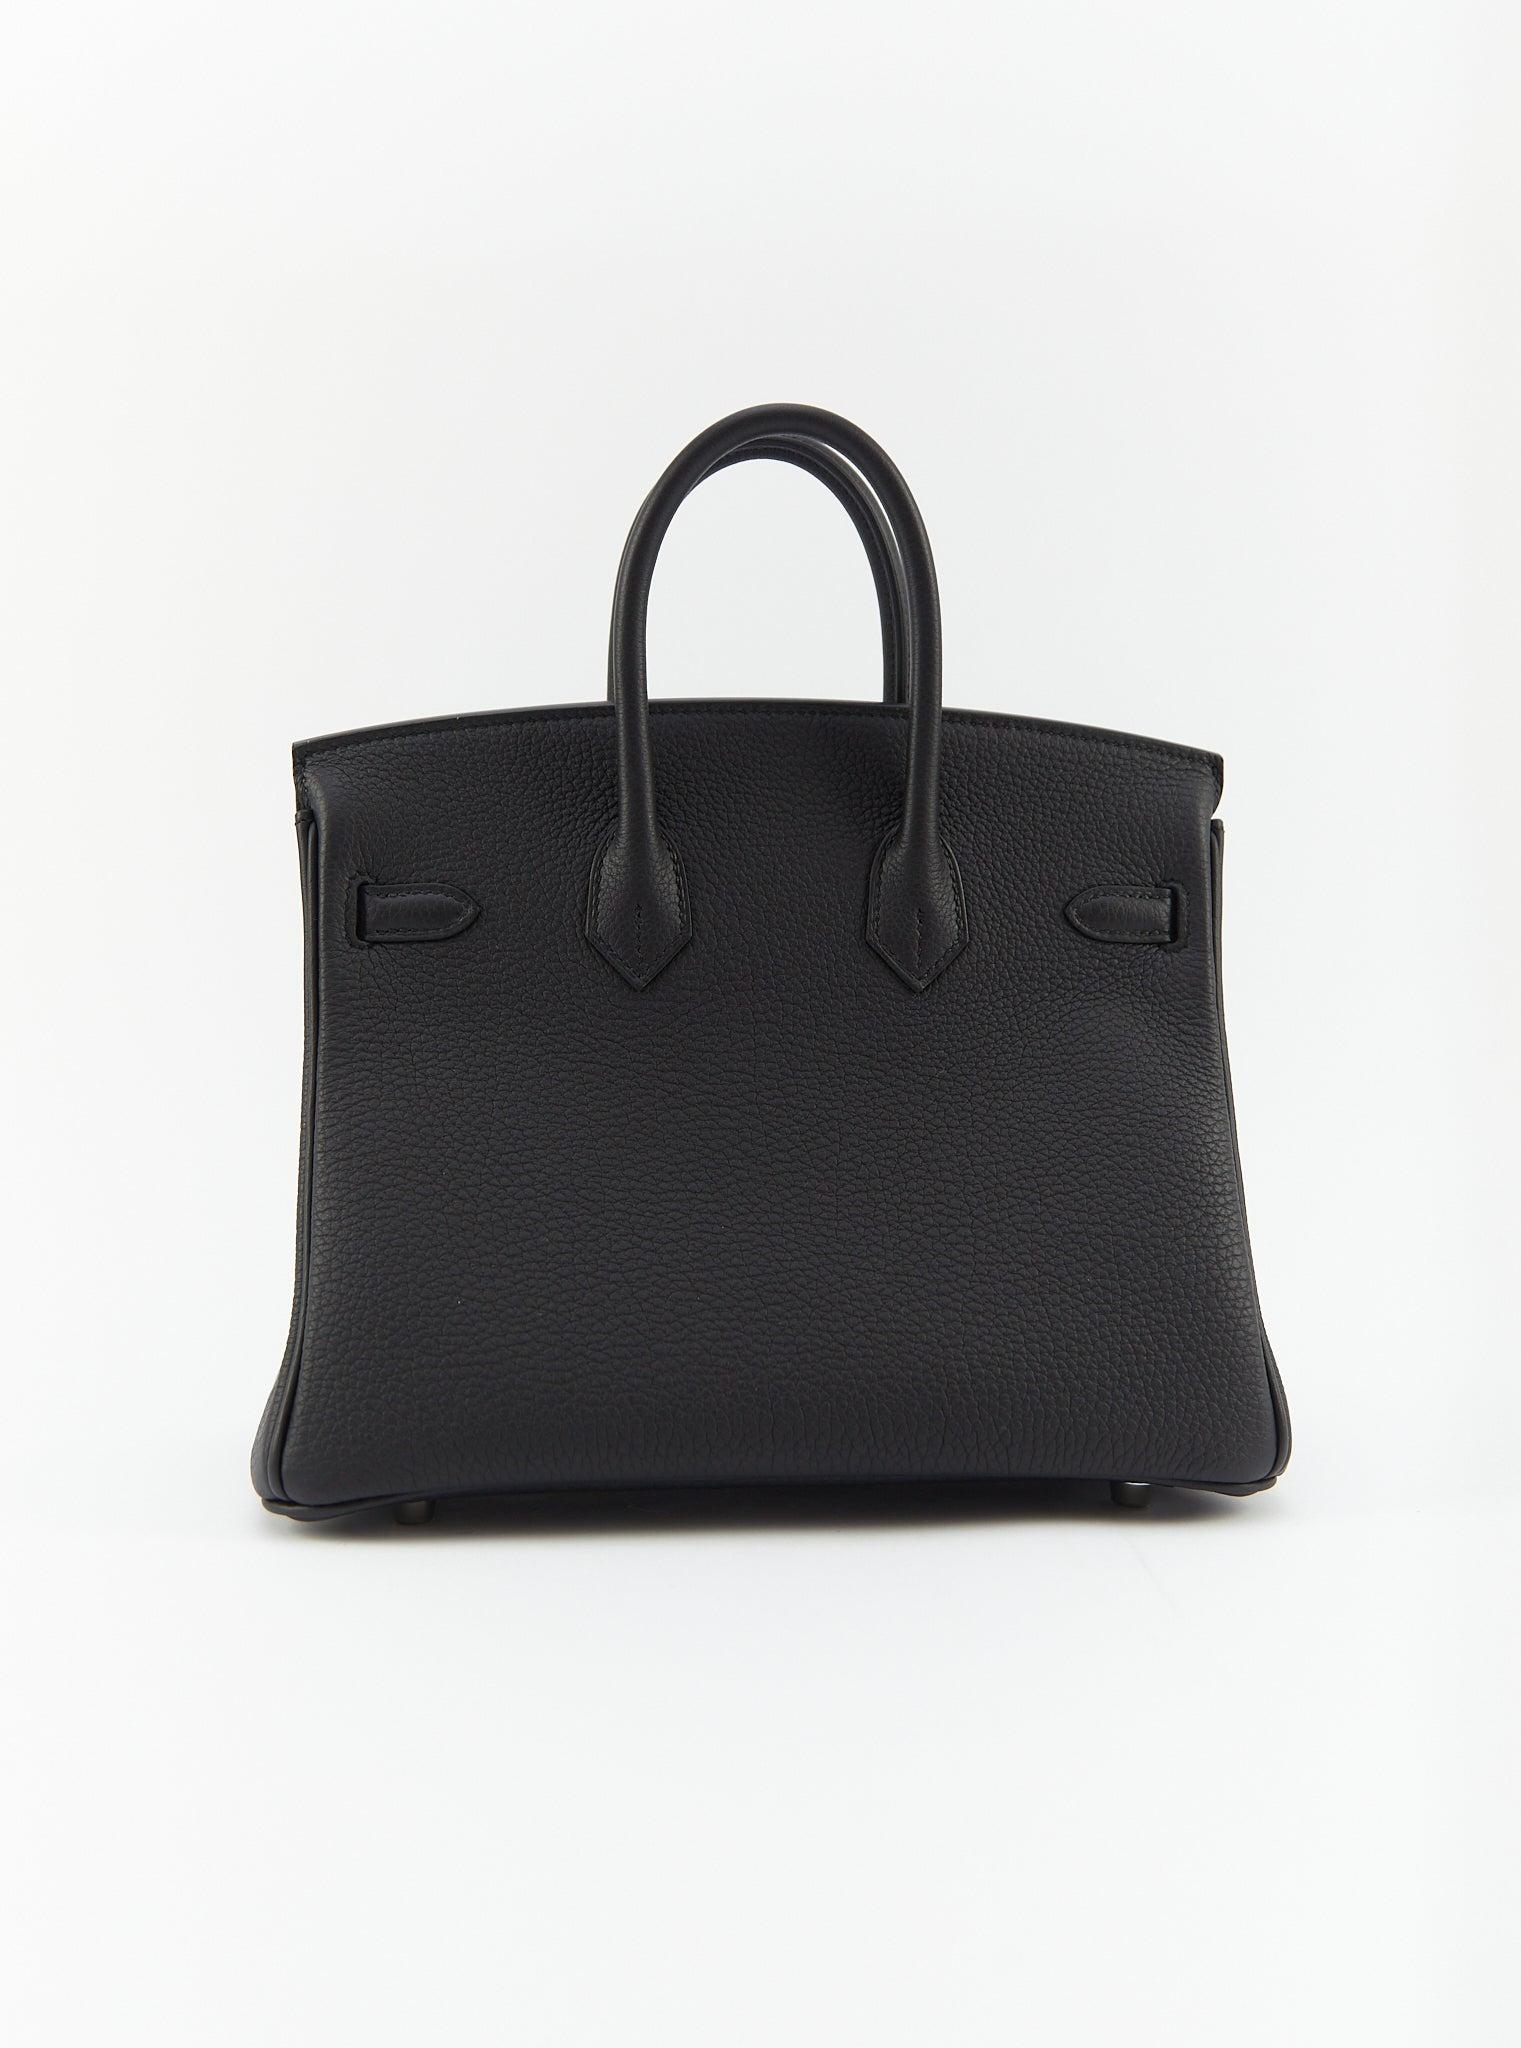 HERMÈS BIRKIN 25CM BLACK Togo Leather with Palladium Hardware Regular price For Sale 1